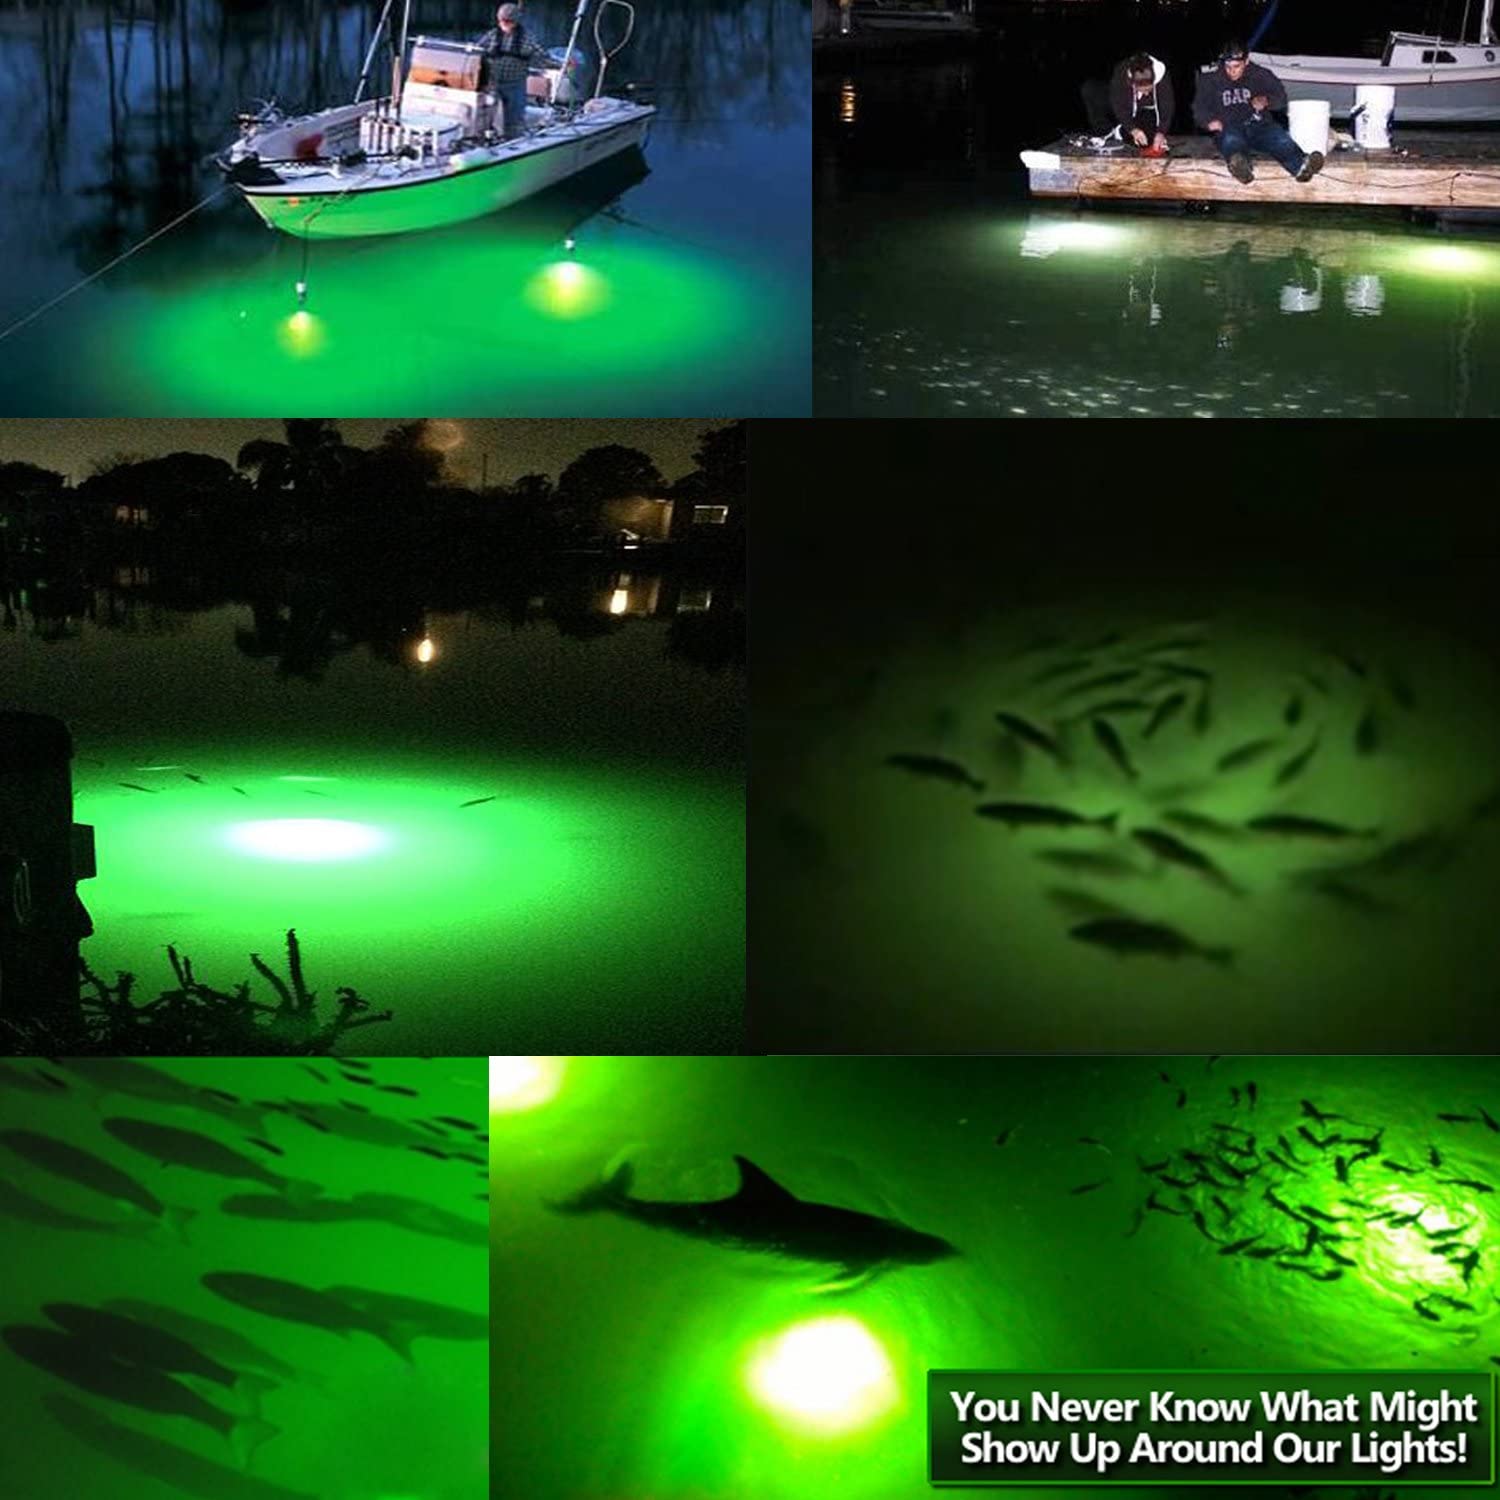 Goture IP68 Underwater Fishing Light LED Submersible Fishing Light